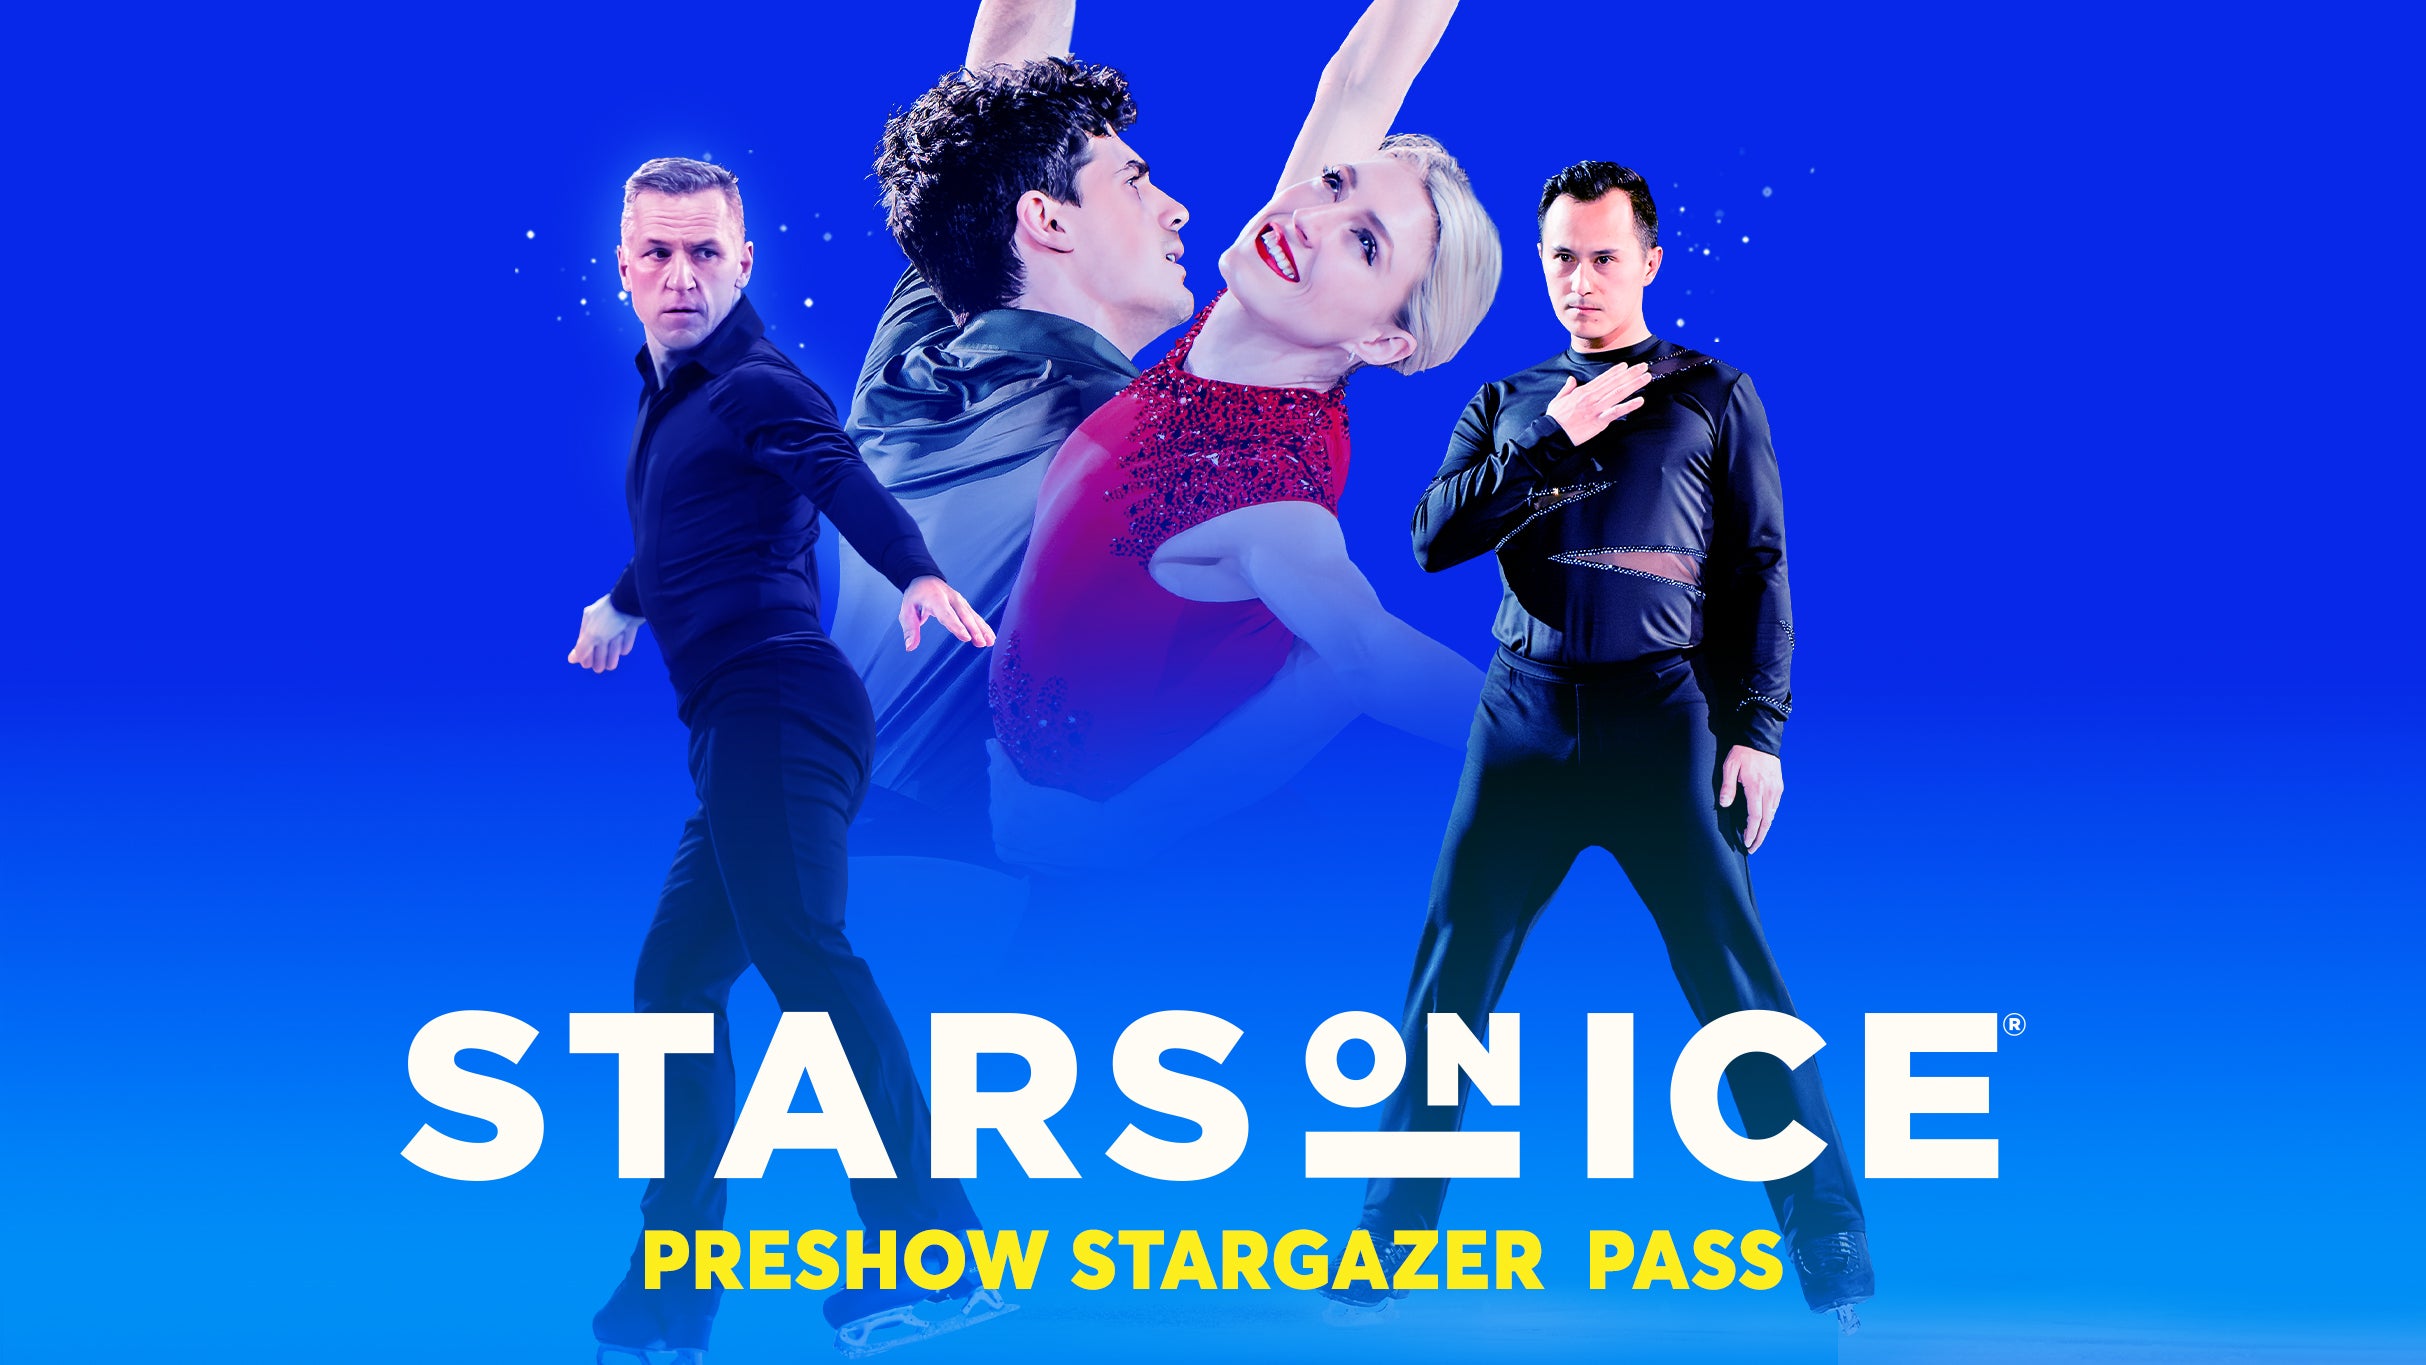 Stars on Ice Pre-Show Stargazer Pass pre-sale passcode